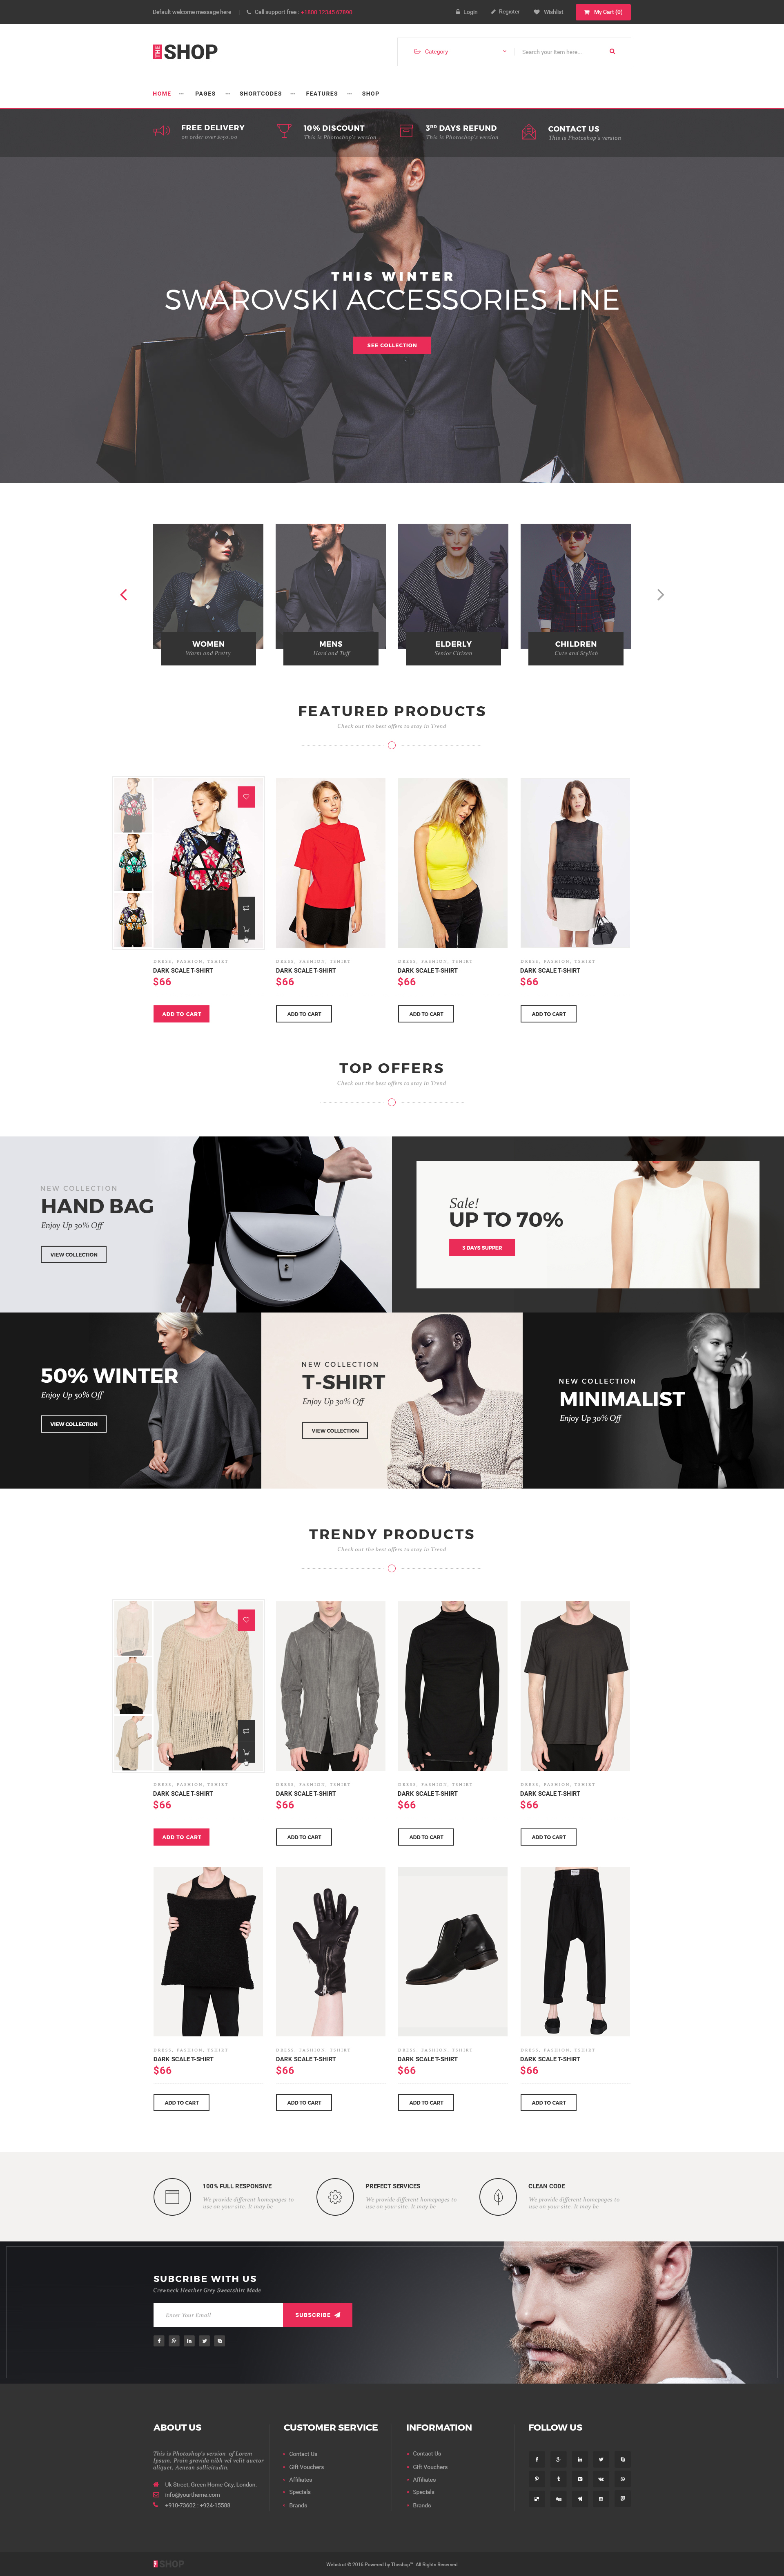 The Shop | e-commerce PSD Template